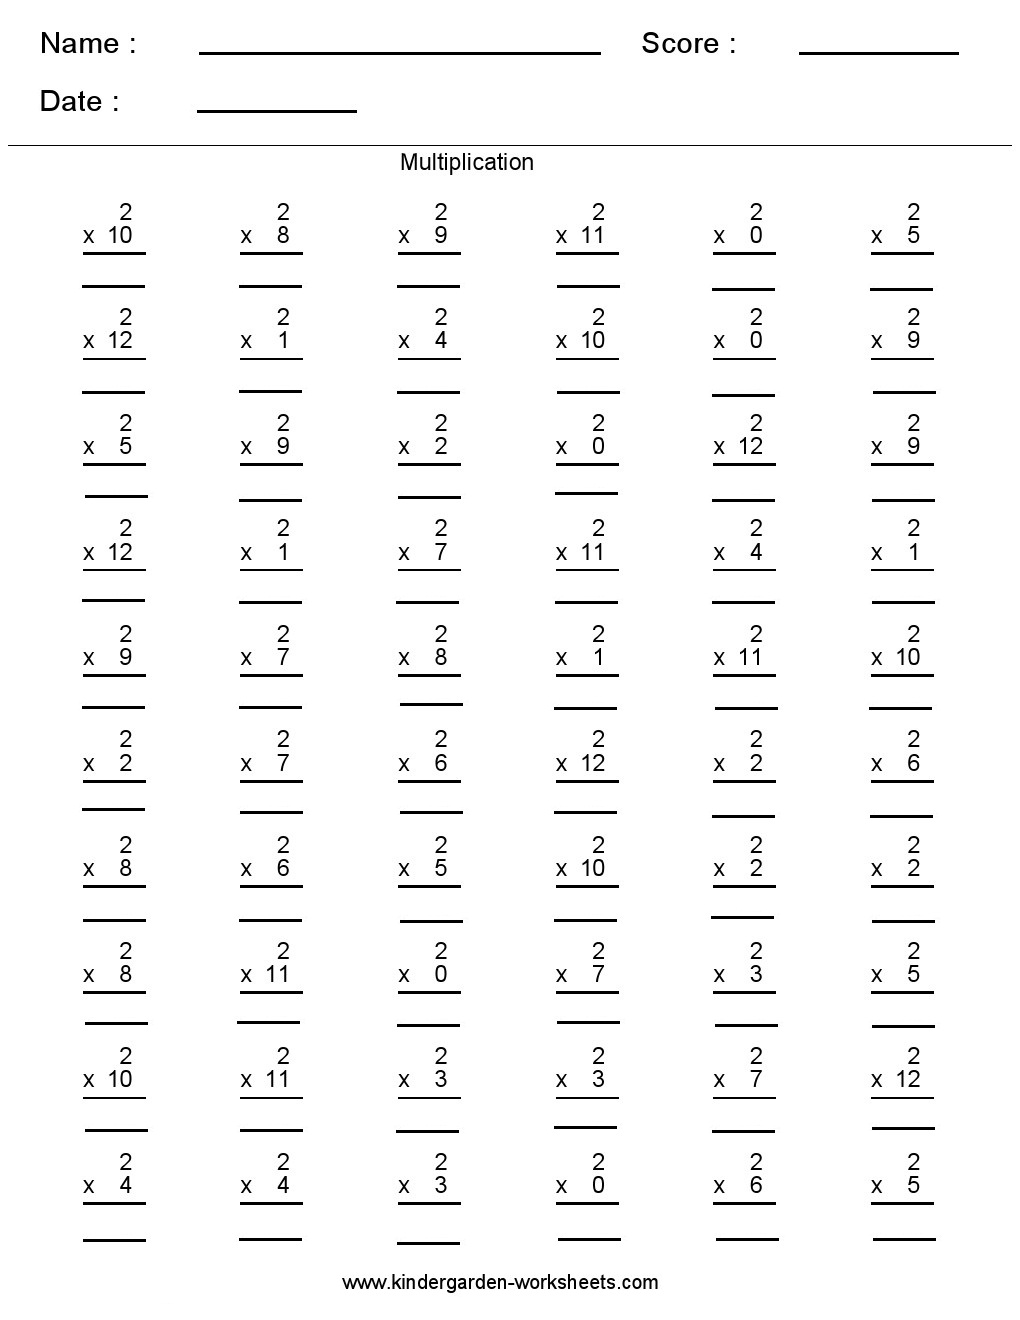 4 Best Images Of 5th Grade Math Worksheets Multiplication Printable 5th Grade Math Worksheets 